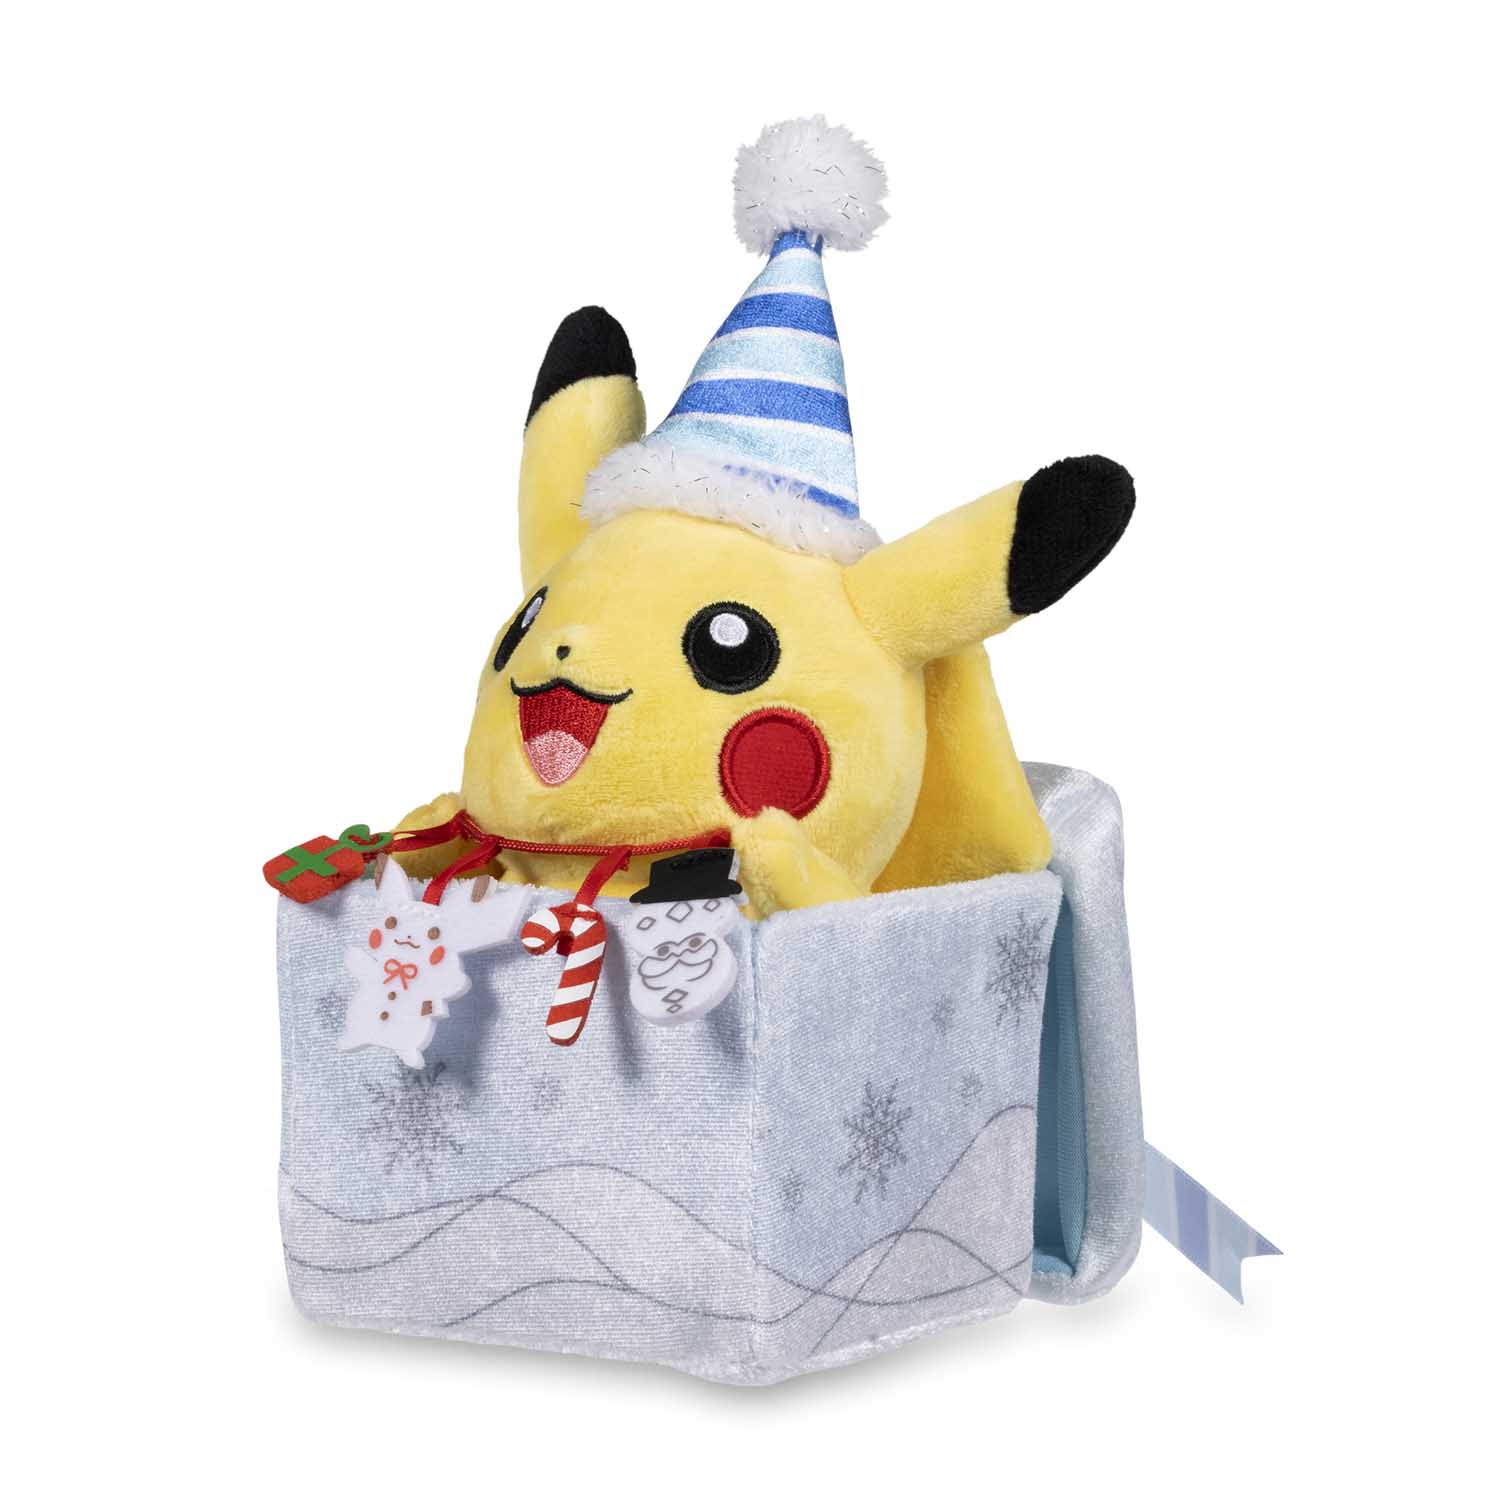 PC_Pikachu_Holiday_Plush_Product_Image.jpg